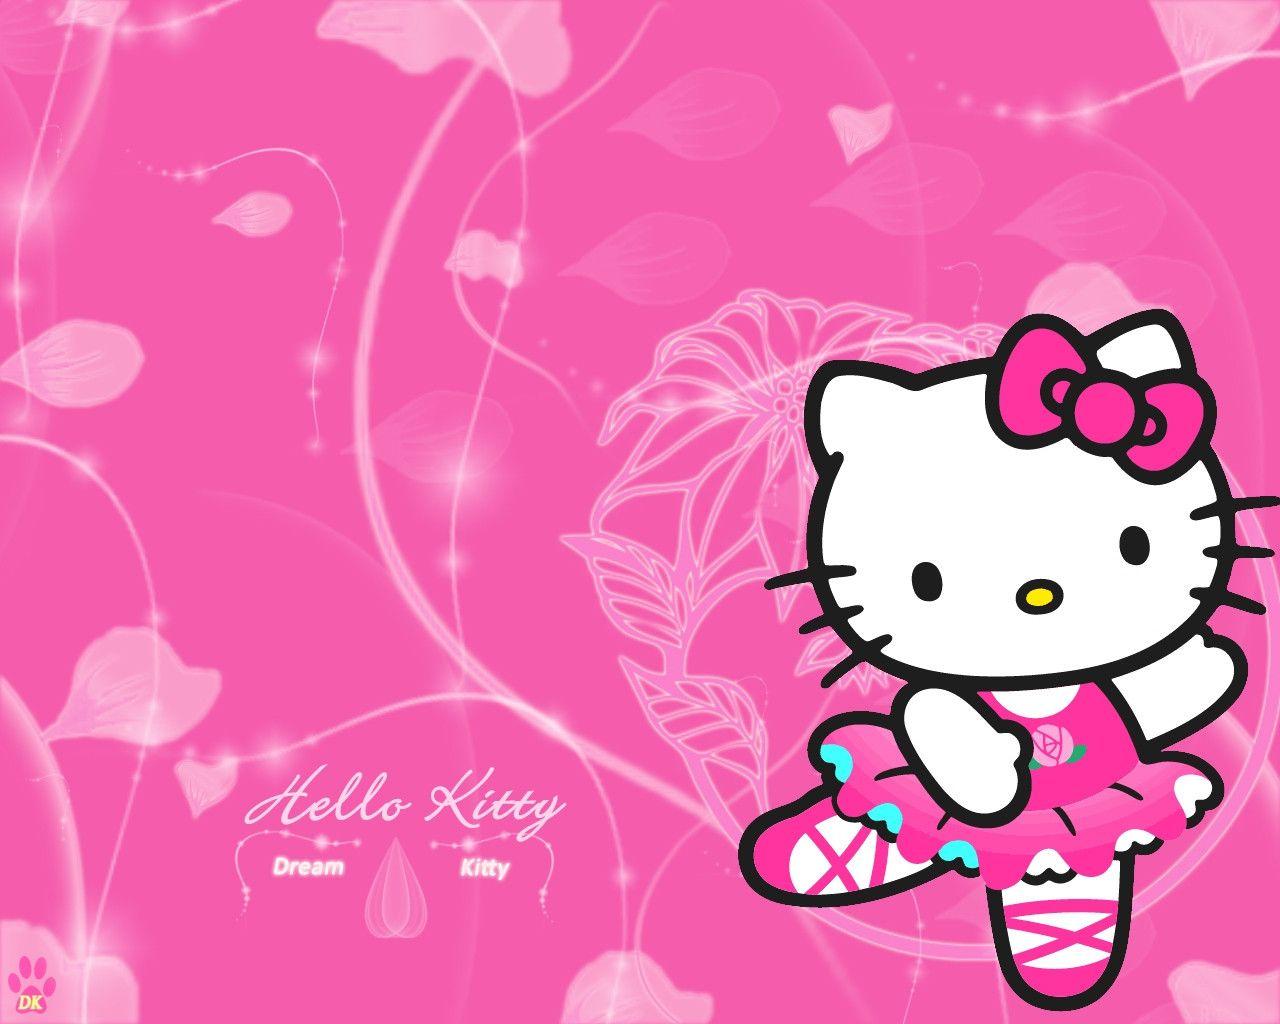 Download Hello Kitty Dream Wallpaper 1280x1024. Full HD Wallpaper